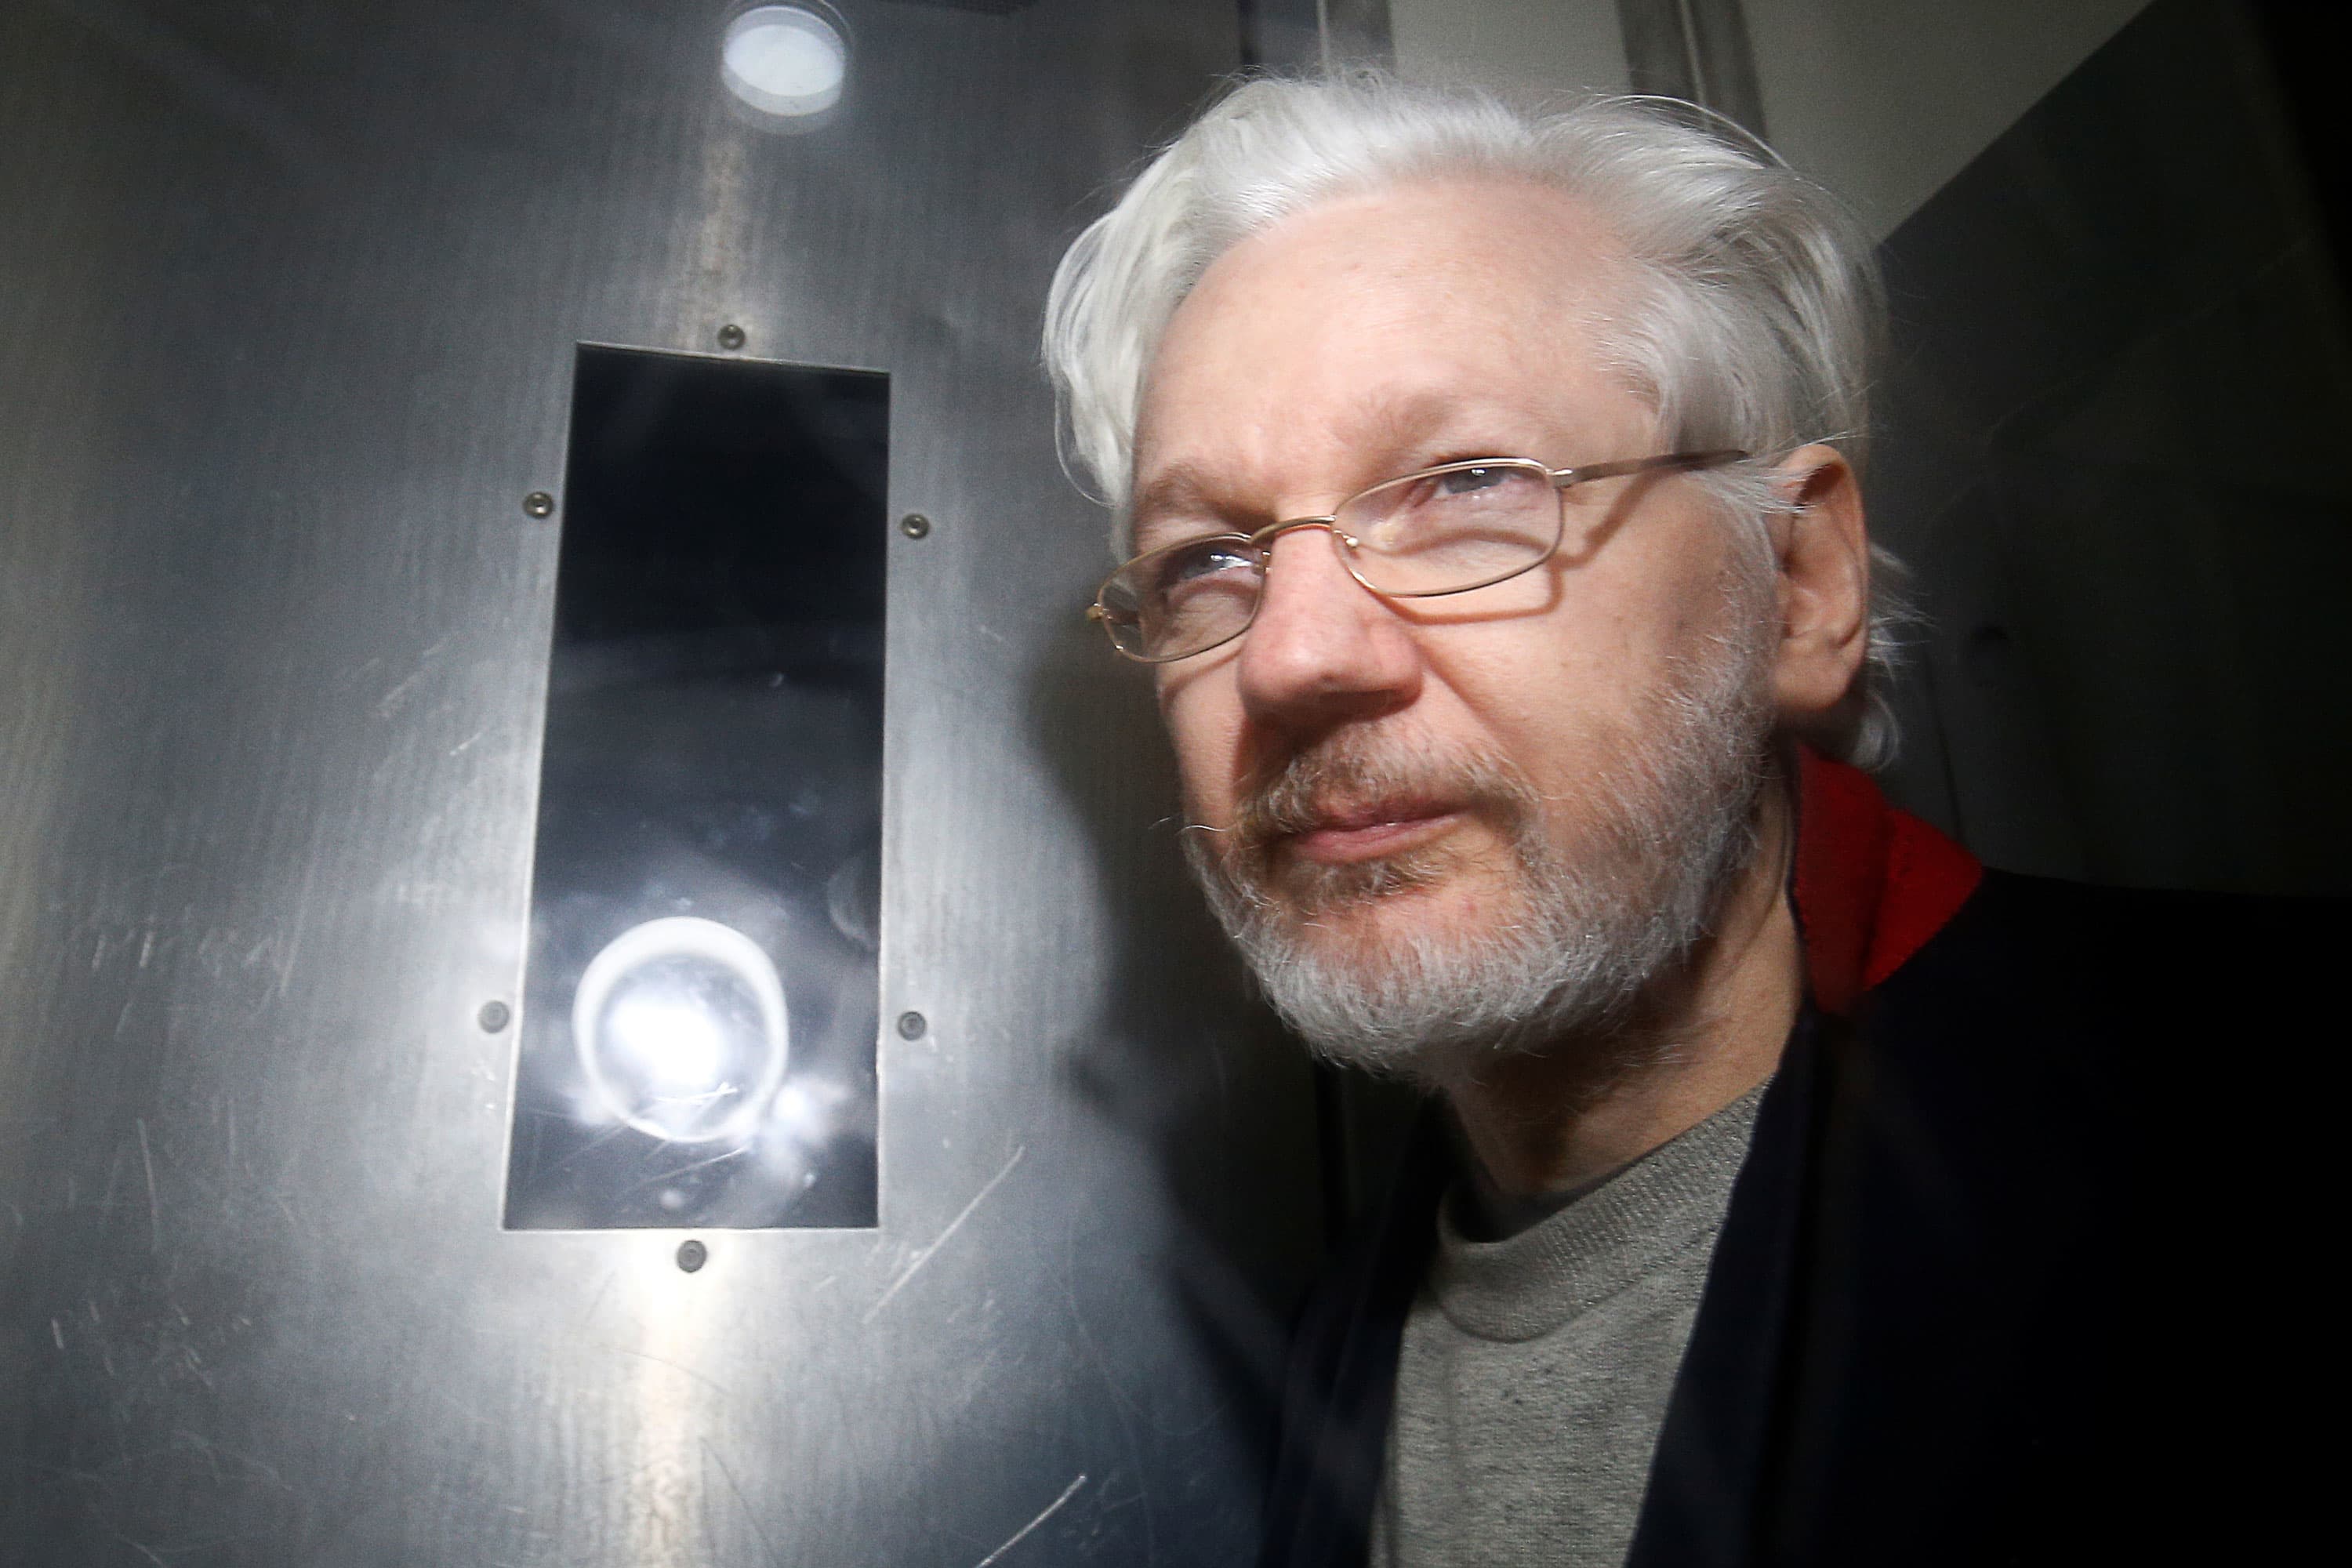 U.S. wins appeal to extradite Wikileaks founder Julian Assange from the UK